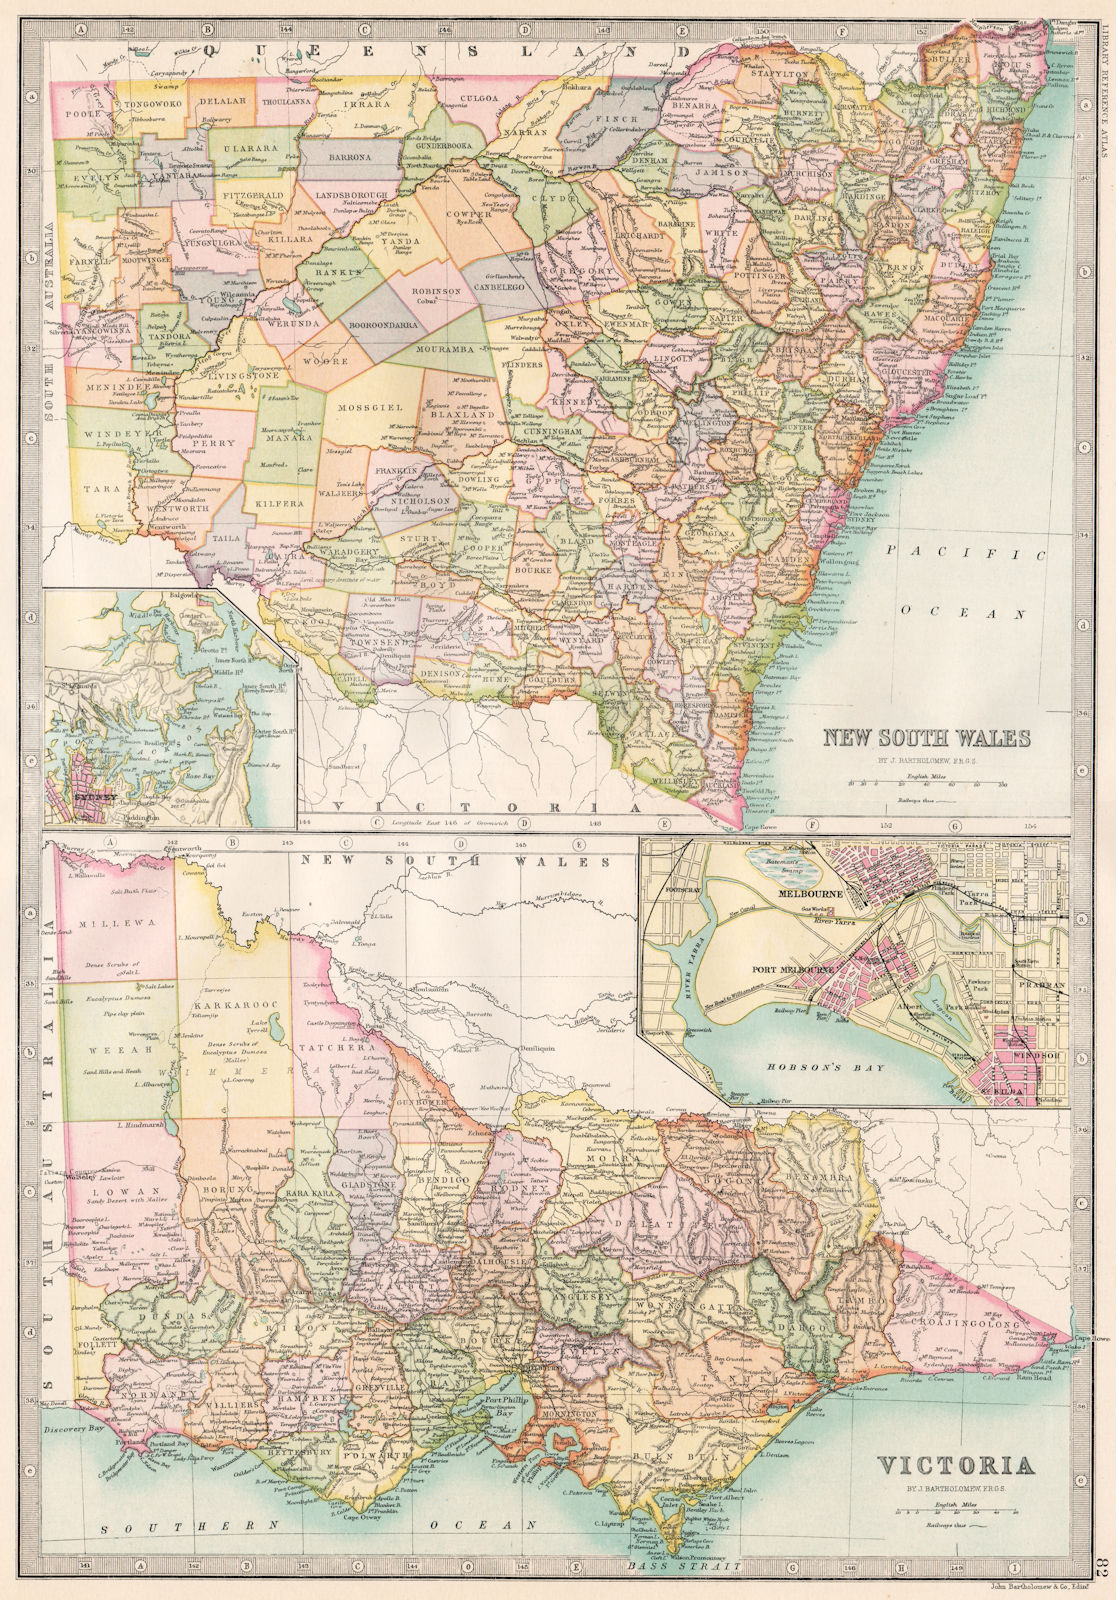 AUSTRALIA. New South Wales; Victoria; inset Melbourne. BARTHOLOMEW 1890 map